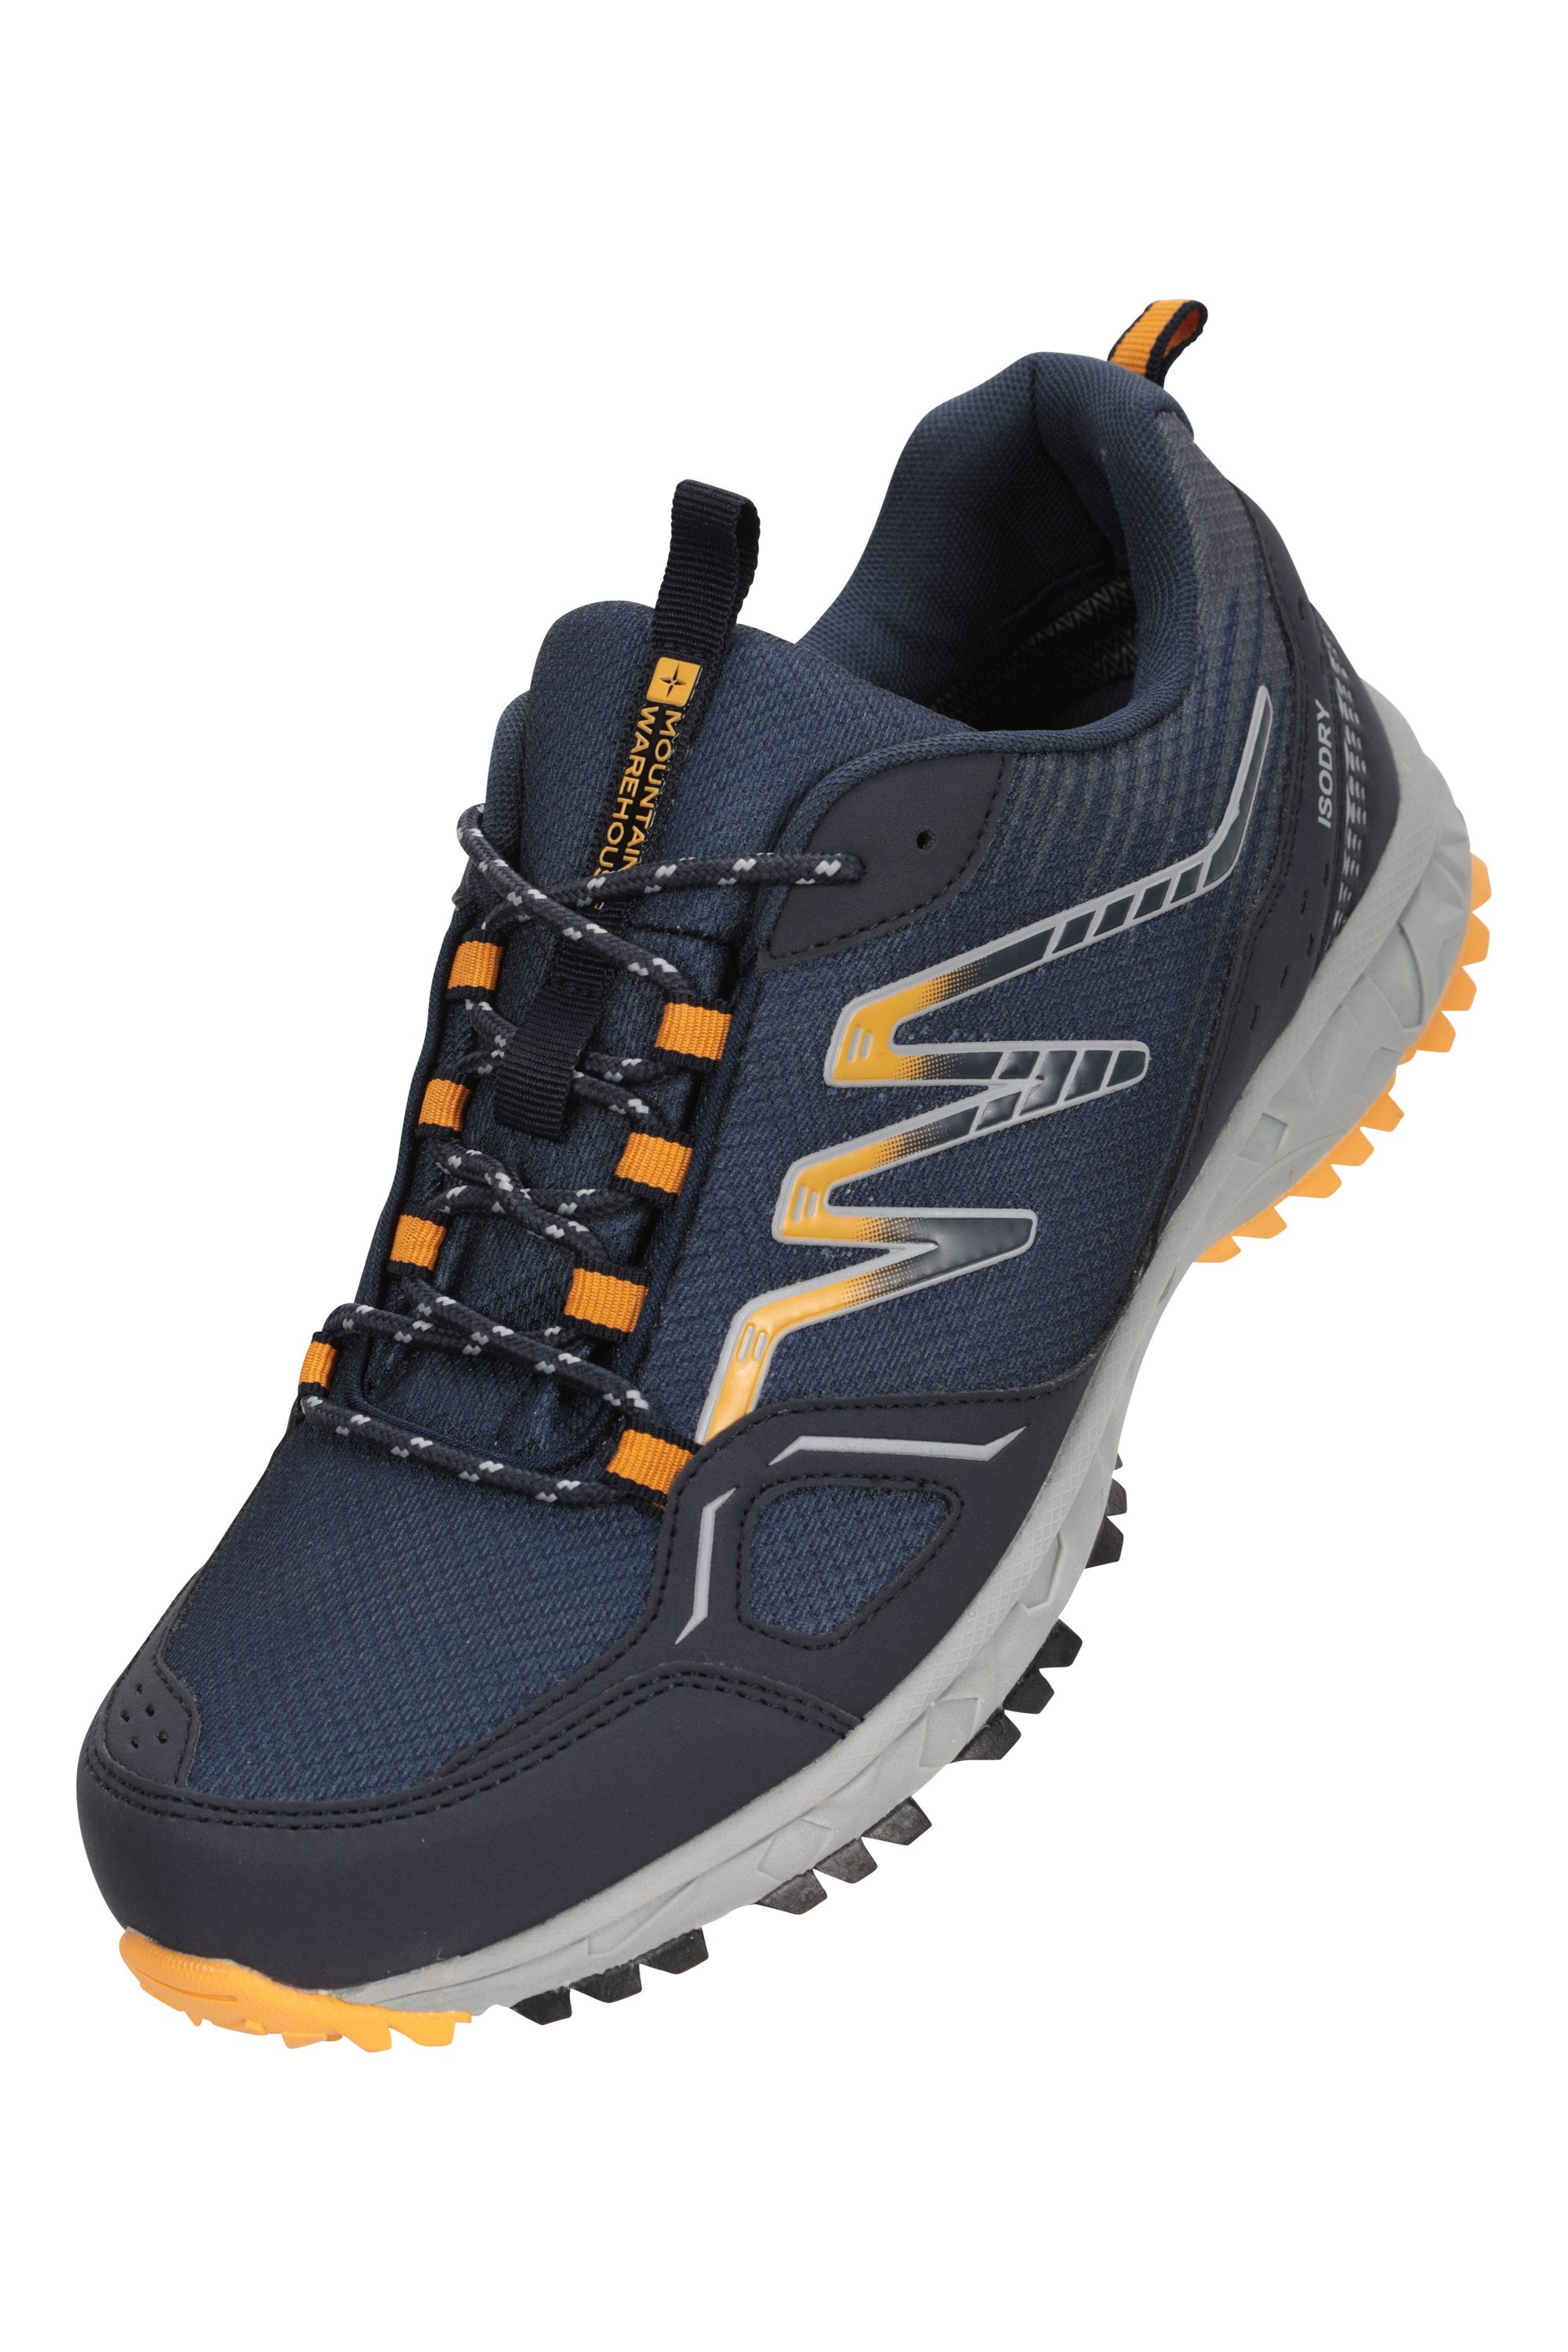 Mountain Warehouse Enhance Men's Running Trainers Waterproof Hiking Shoes 